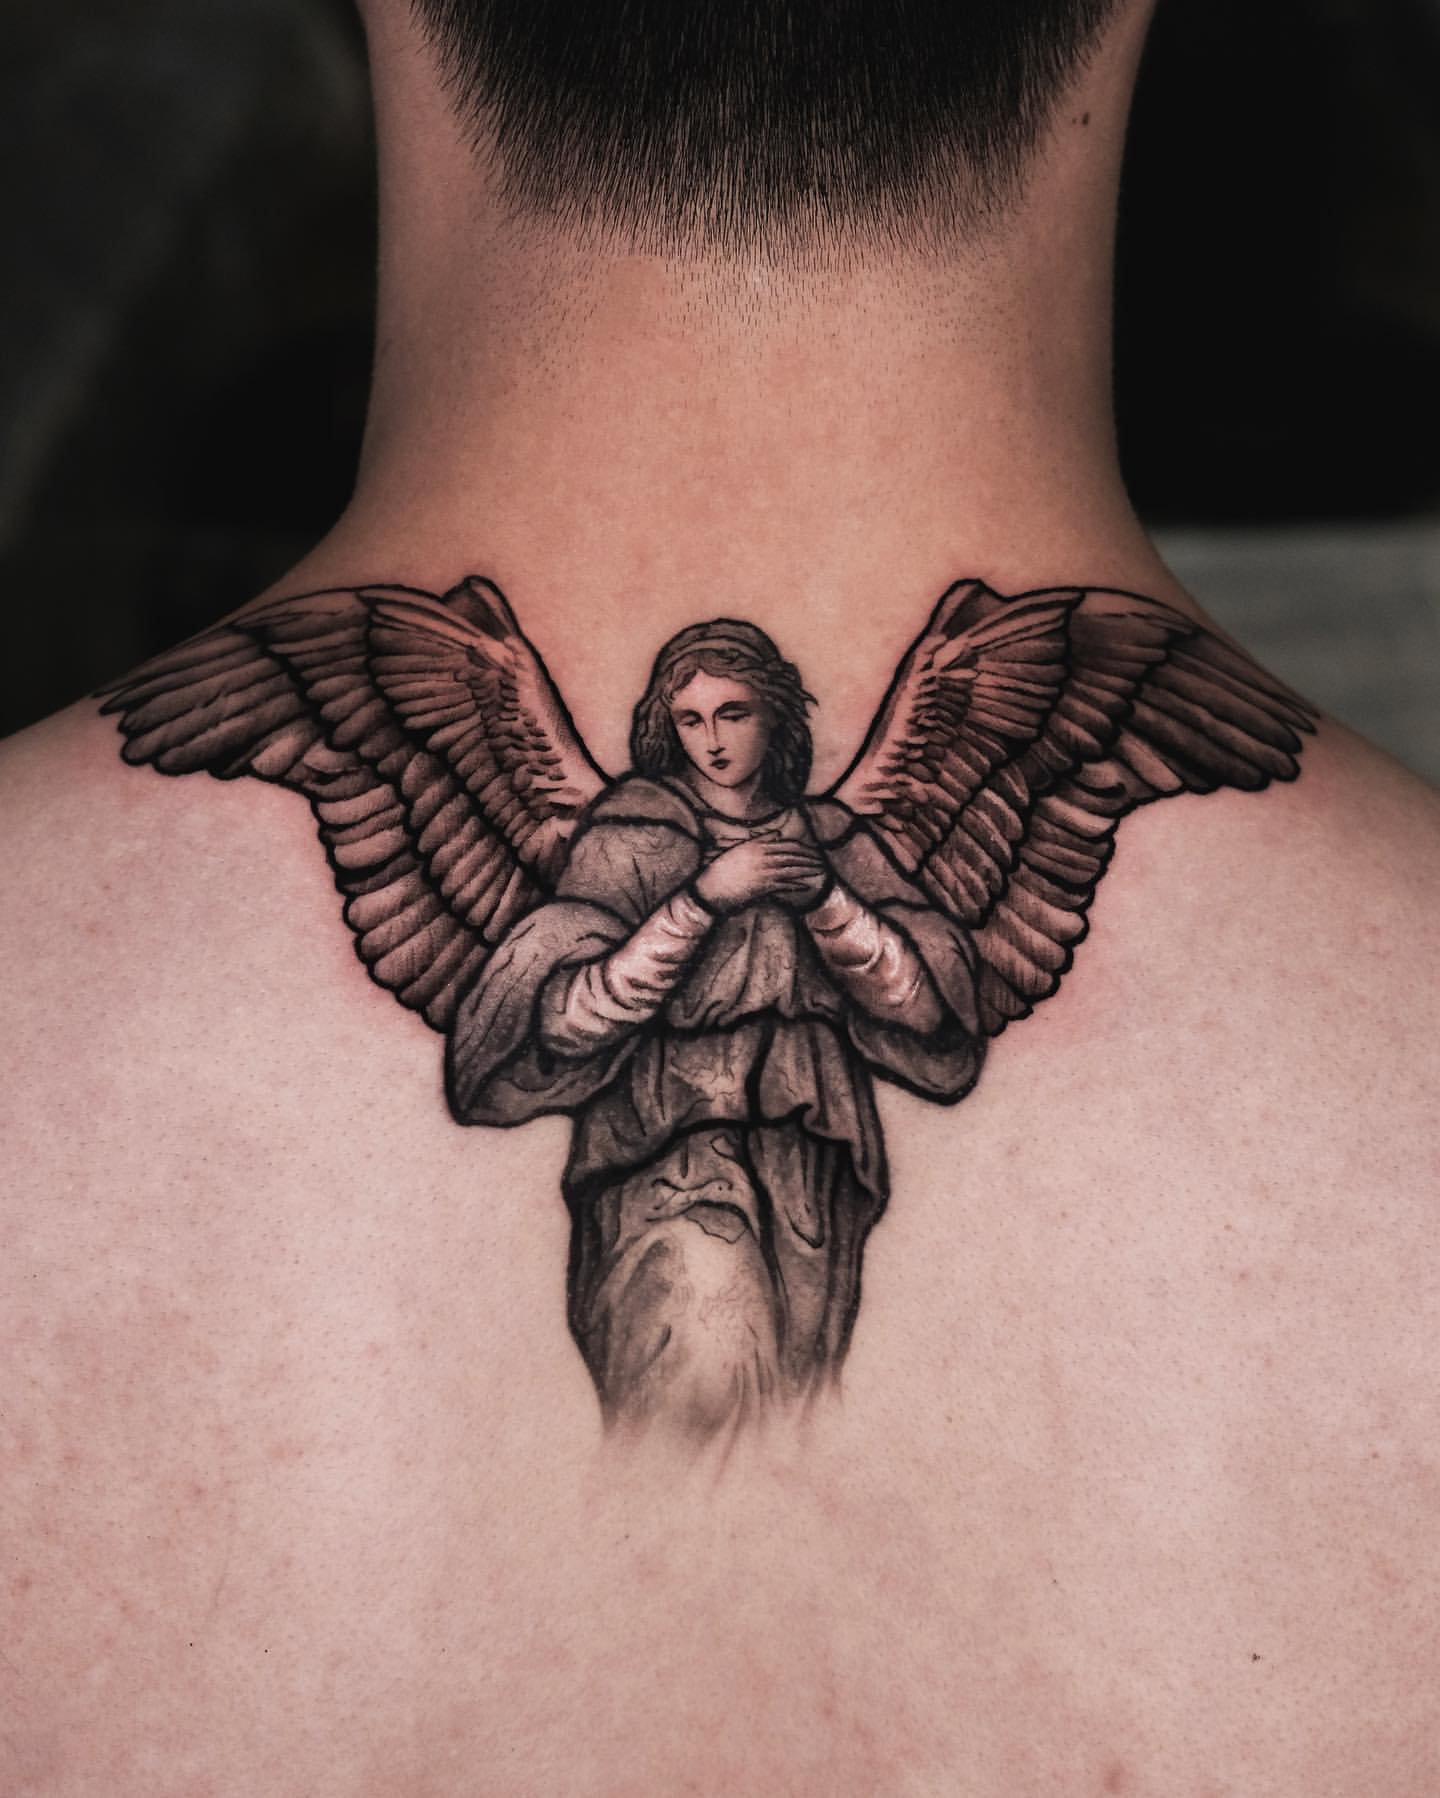 Angel tattoo by iiKuromi on DeviantArt